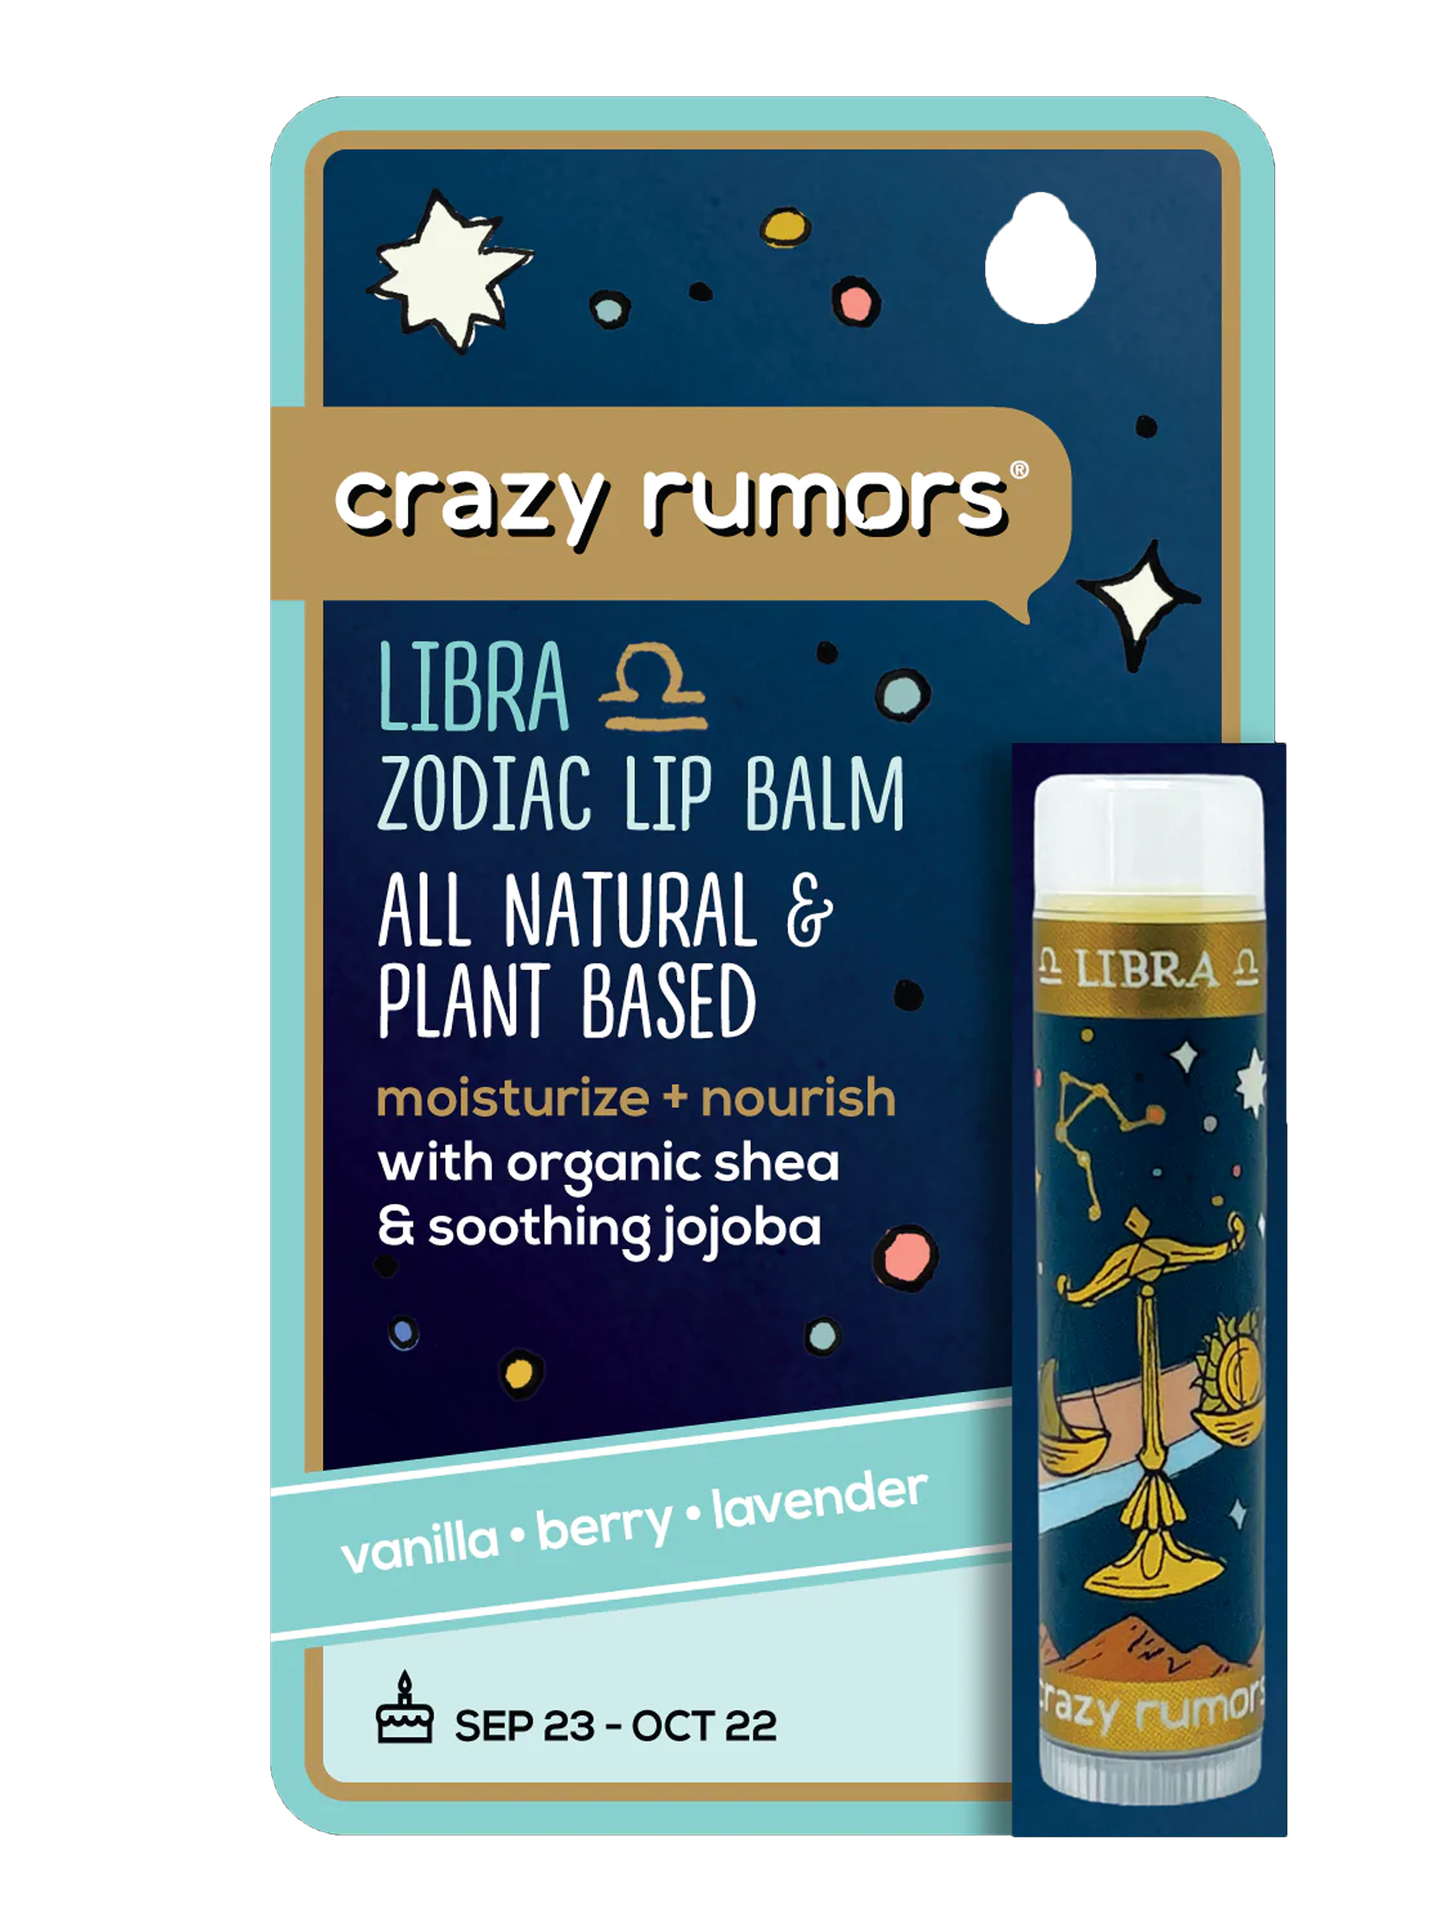 Crazy Rumors - Libra Zodiac Lip Balm